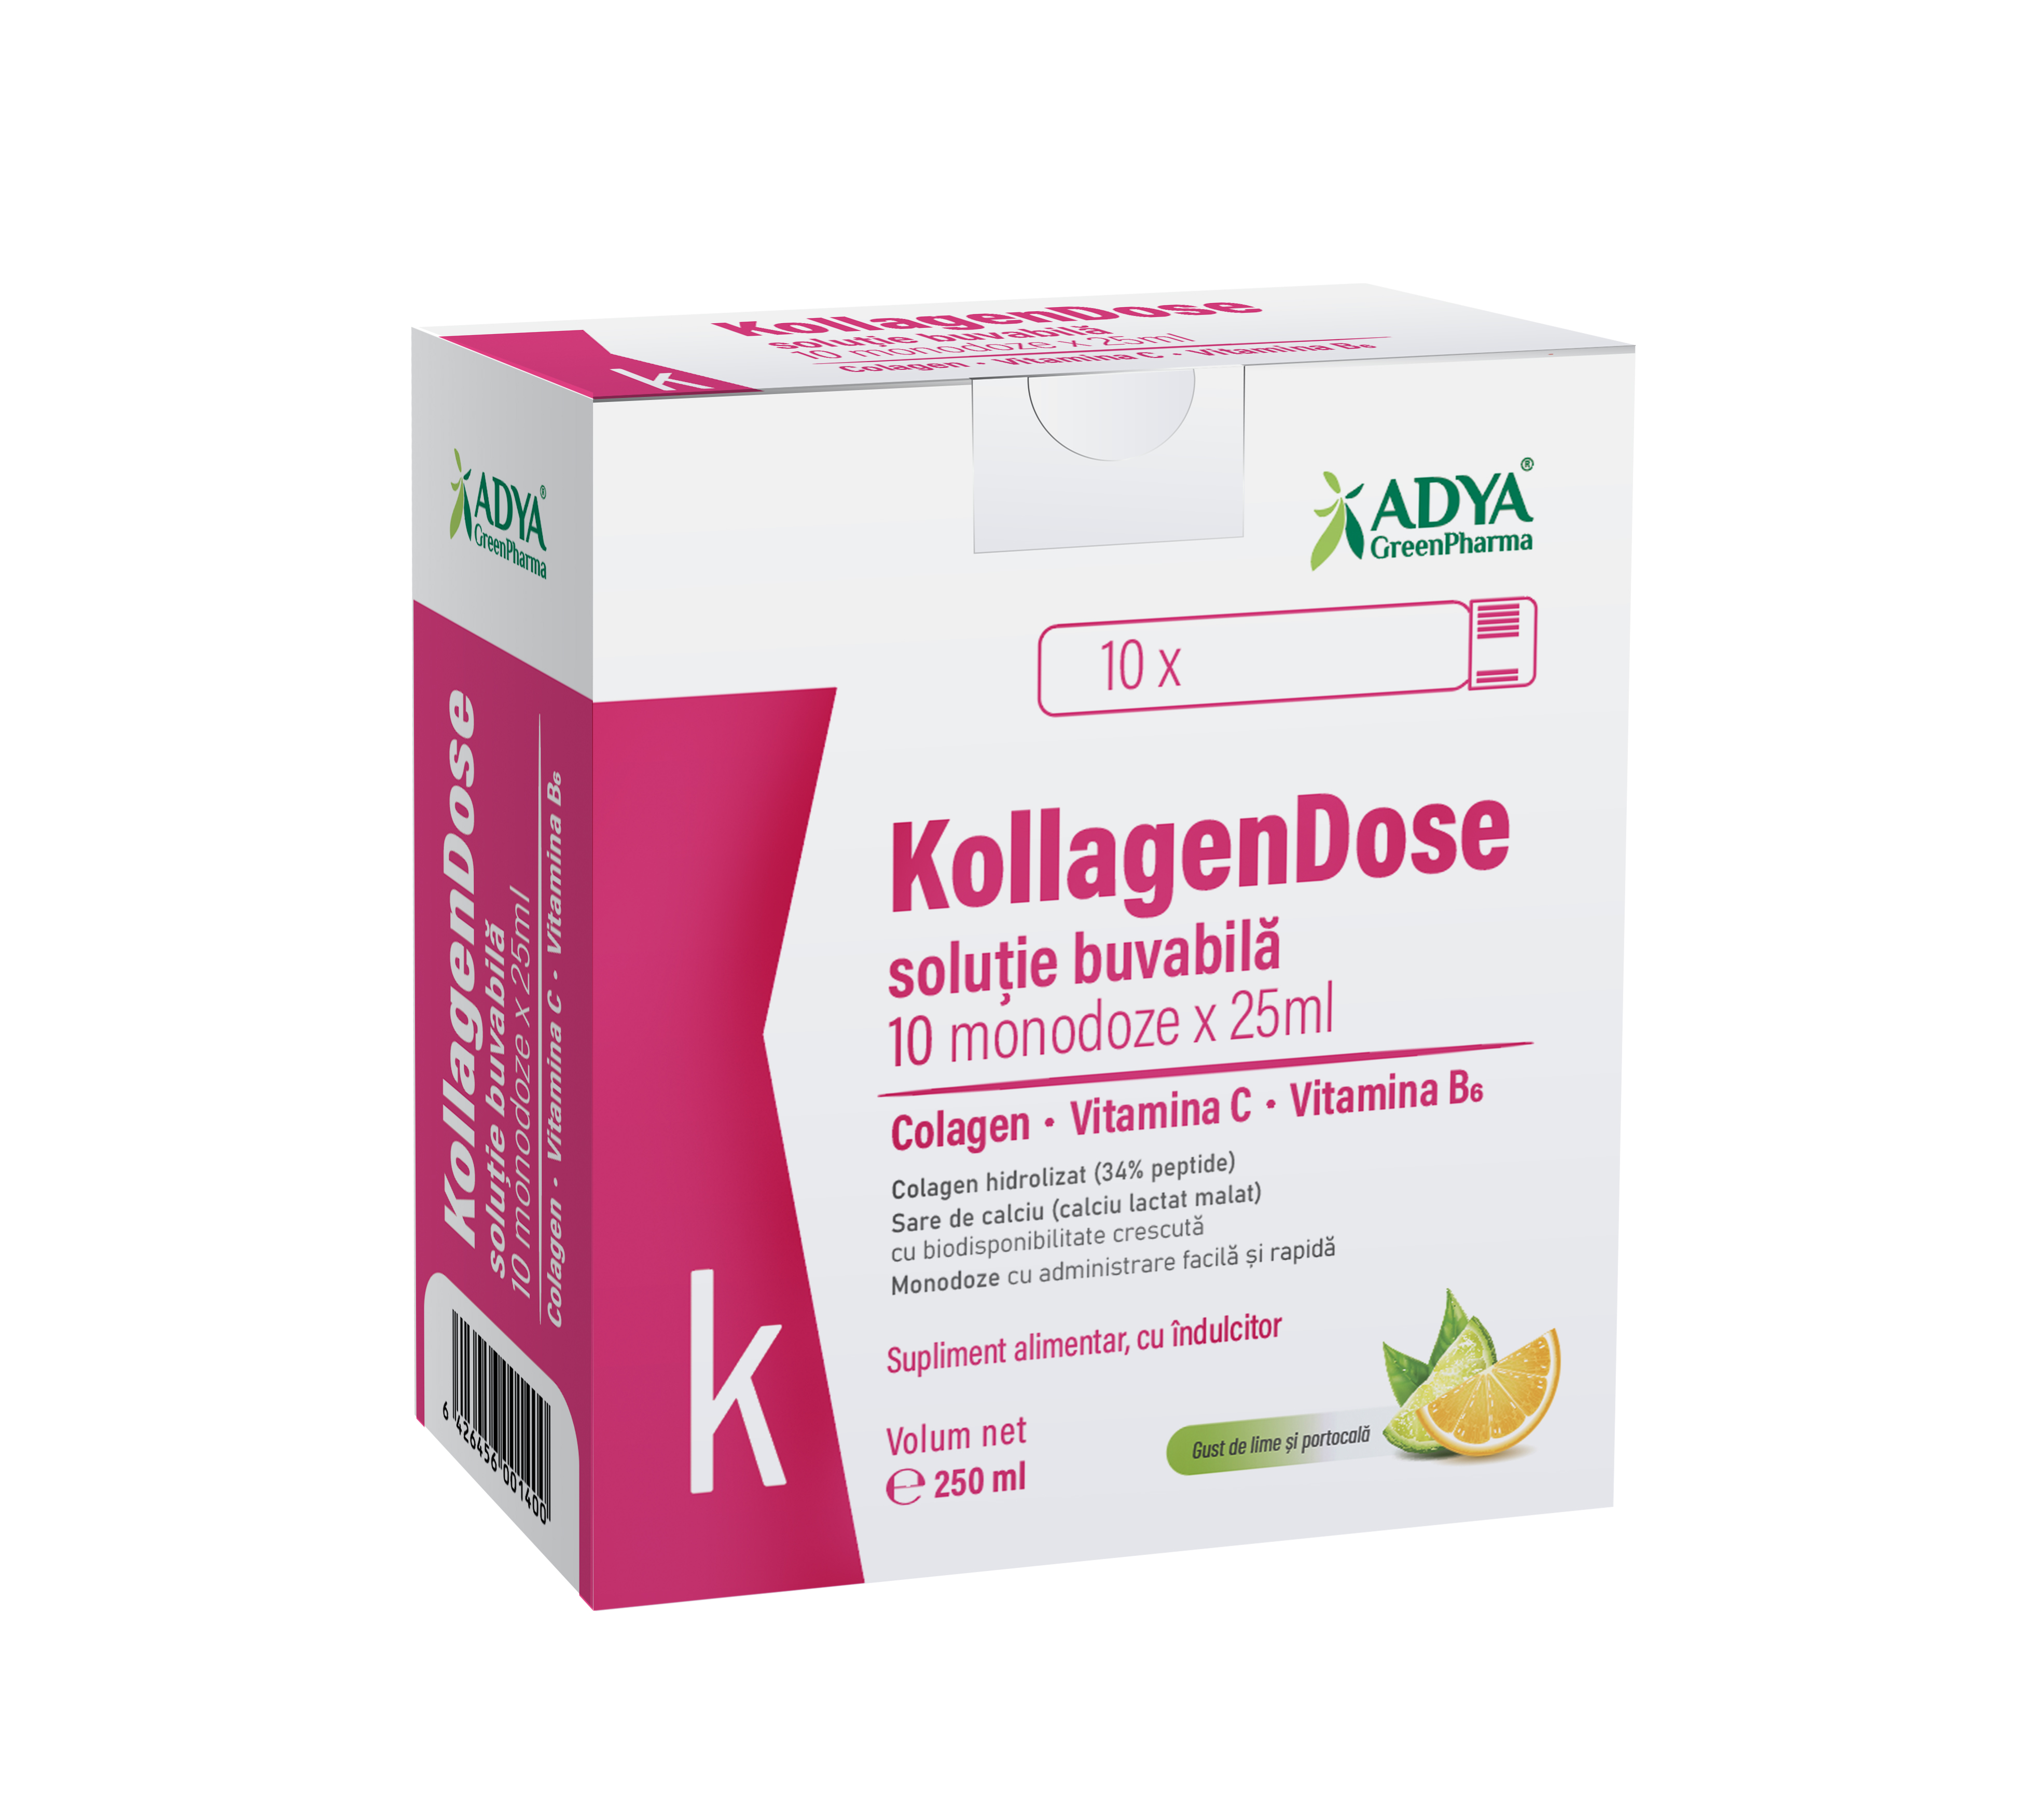 Uz general - KollagenDose, soluție buvabilă, 10 monodoze x 25ml, Adya Green Pharma, sinapis.ro